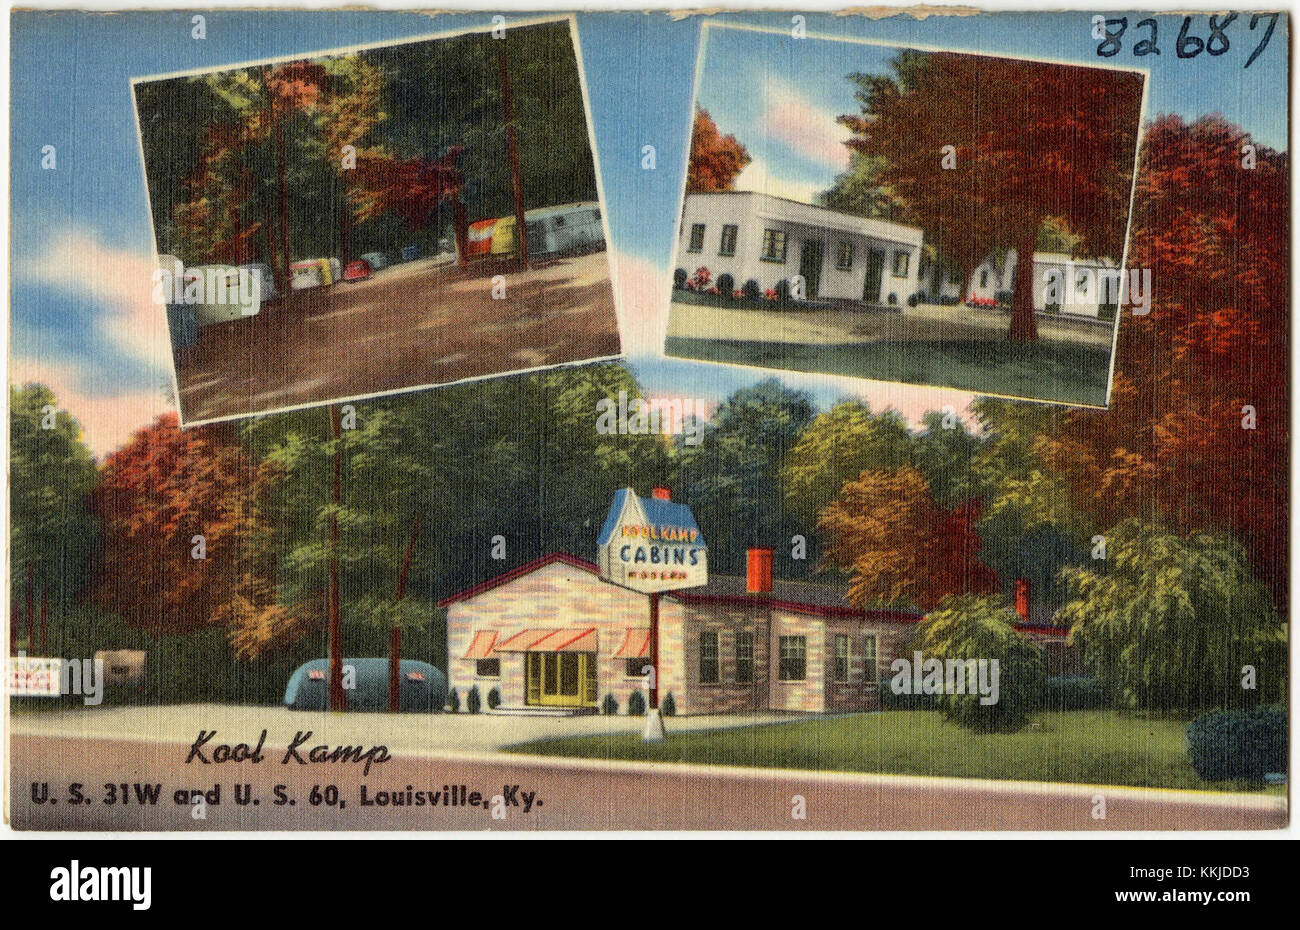 Kool Kamp, U. S. 31W und U. S. 60, Louisville, Ky (82687) Stockfoto